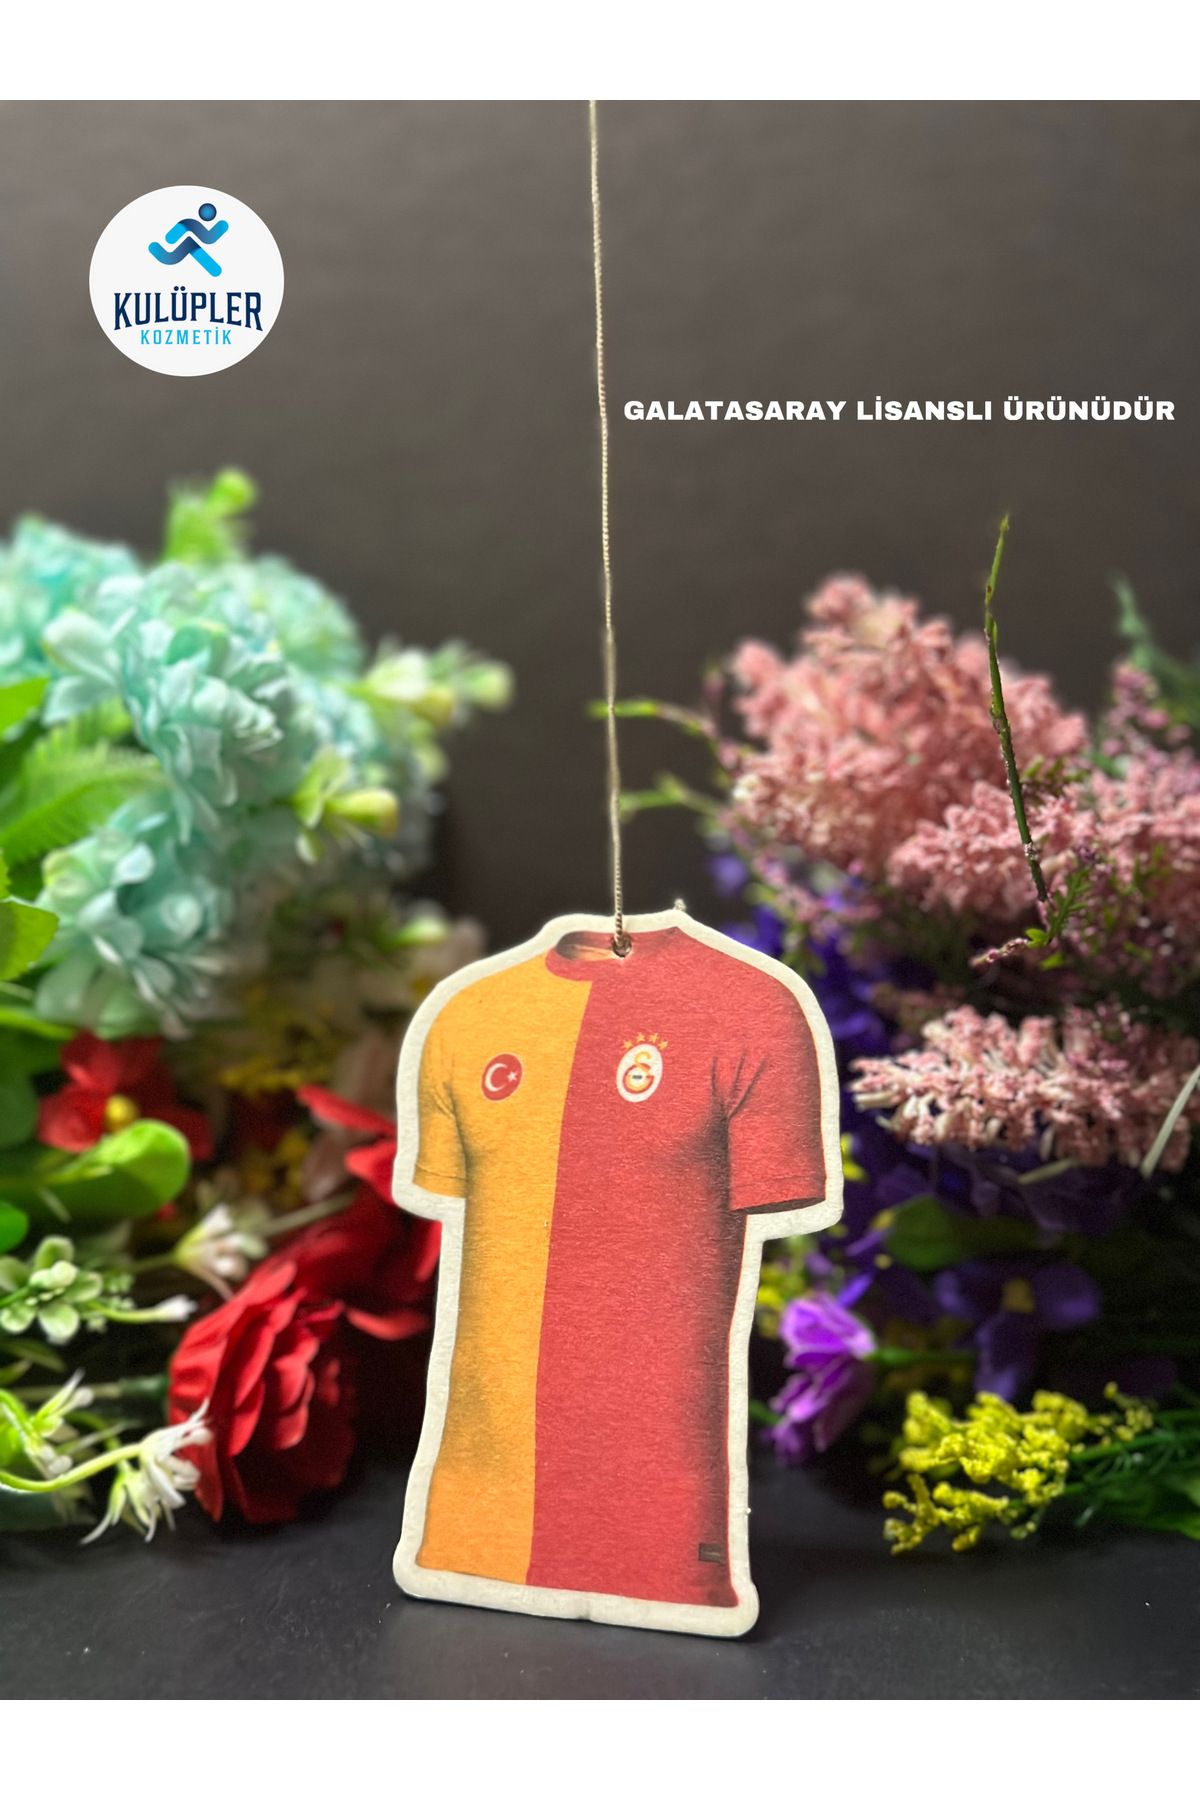 Galatasaray Oto Kokusu/Galatasaray